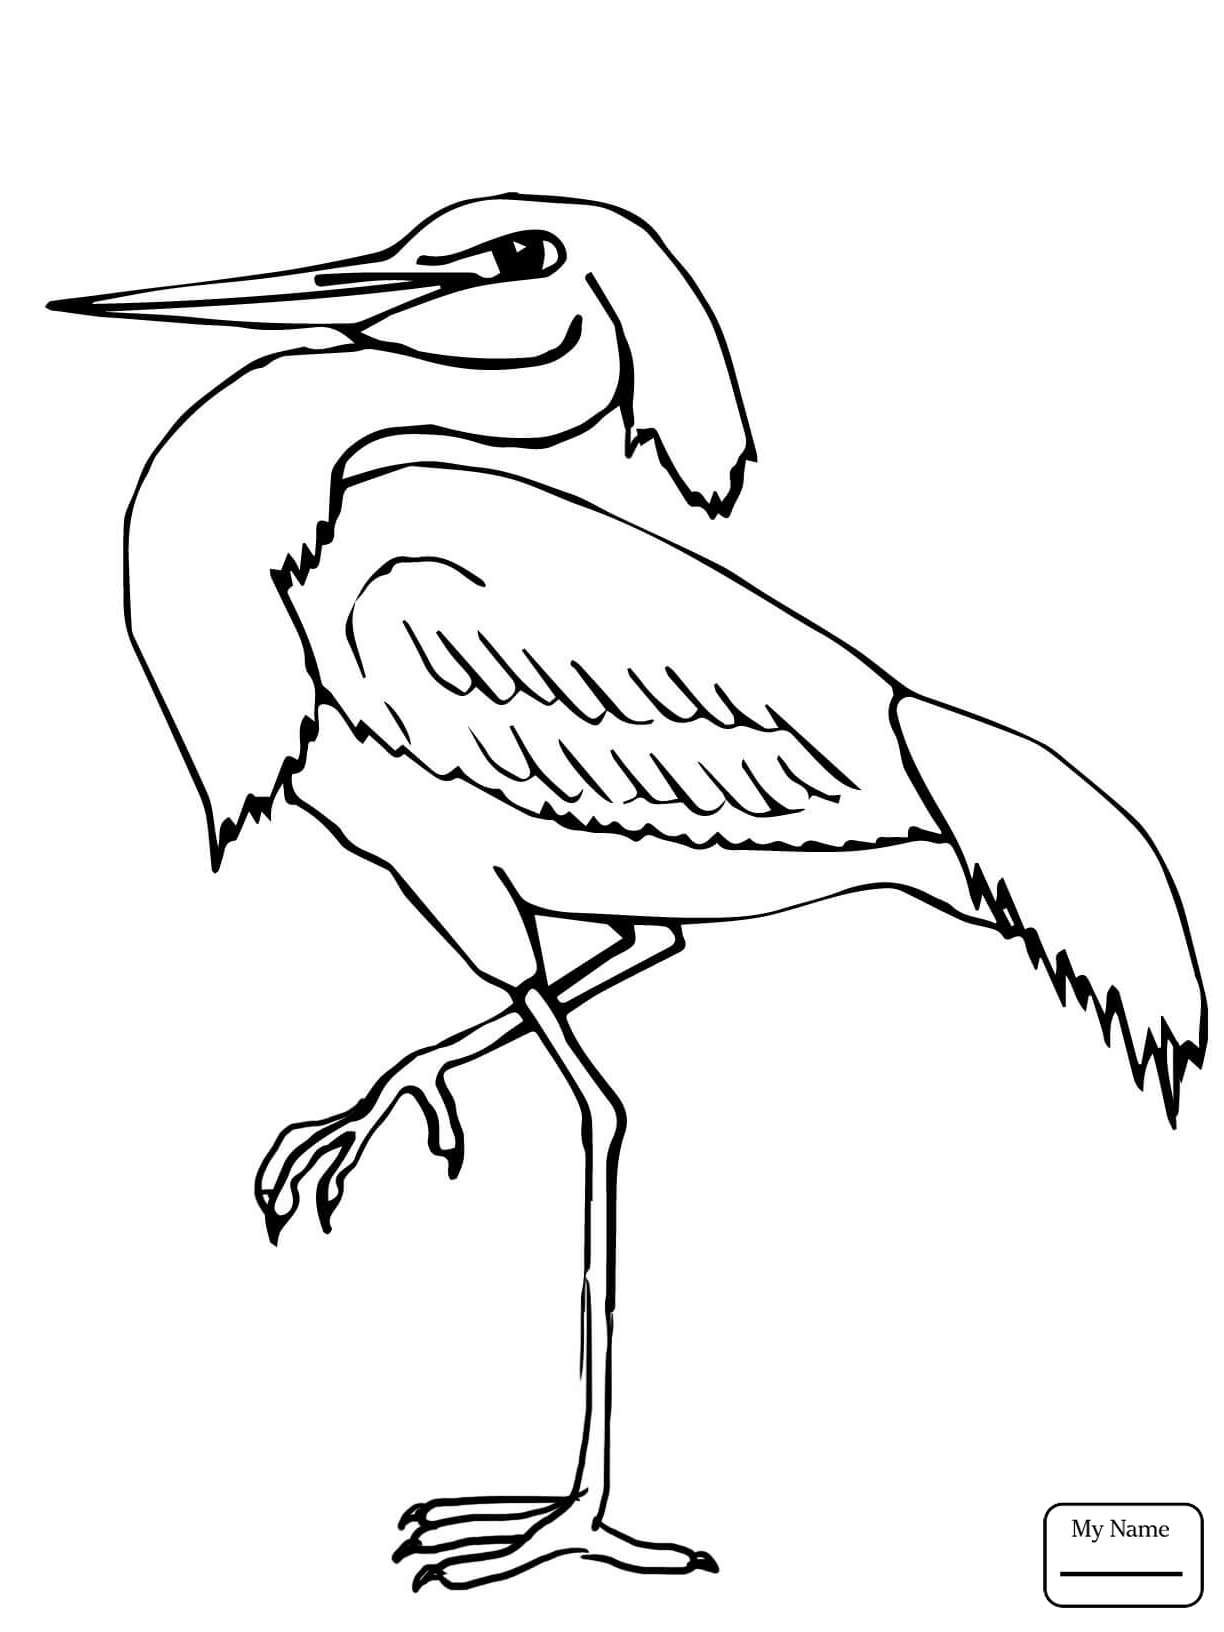 Heron Coloring Page at GetColorings.com | Free printable colorings ...